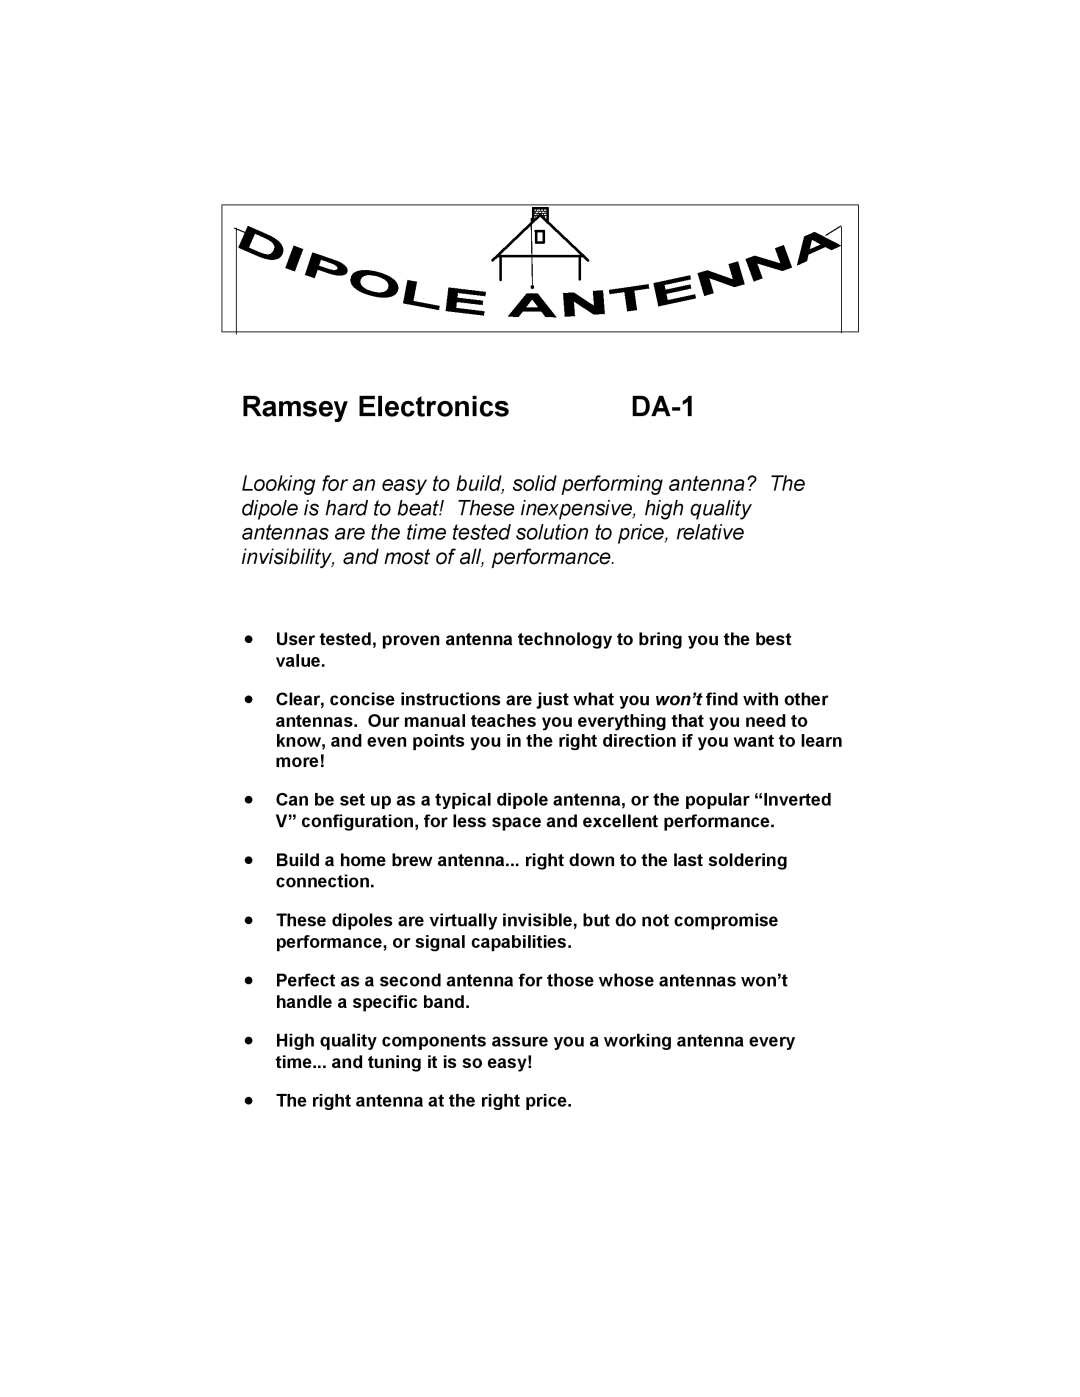 Ramsey Electronics DA-1 manual Ramsey Electronics 